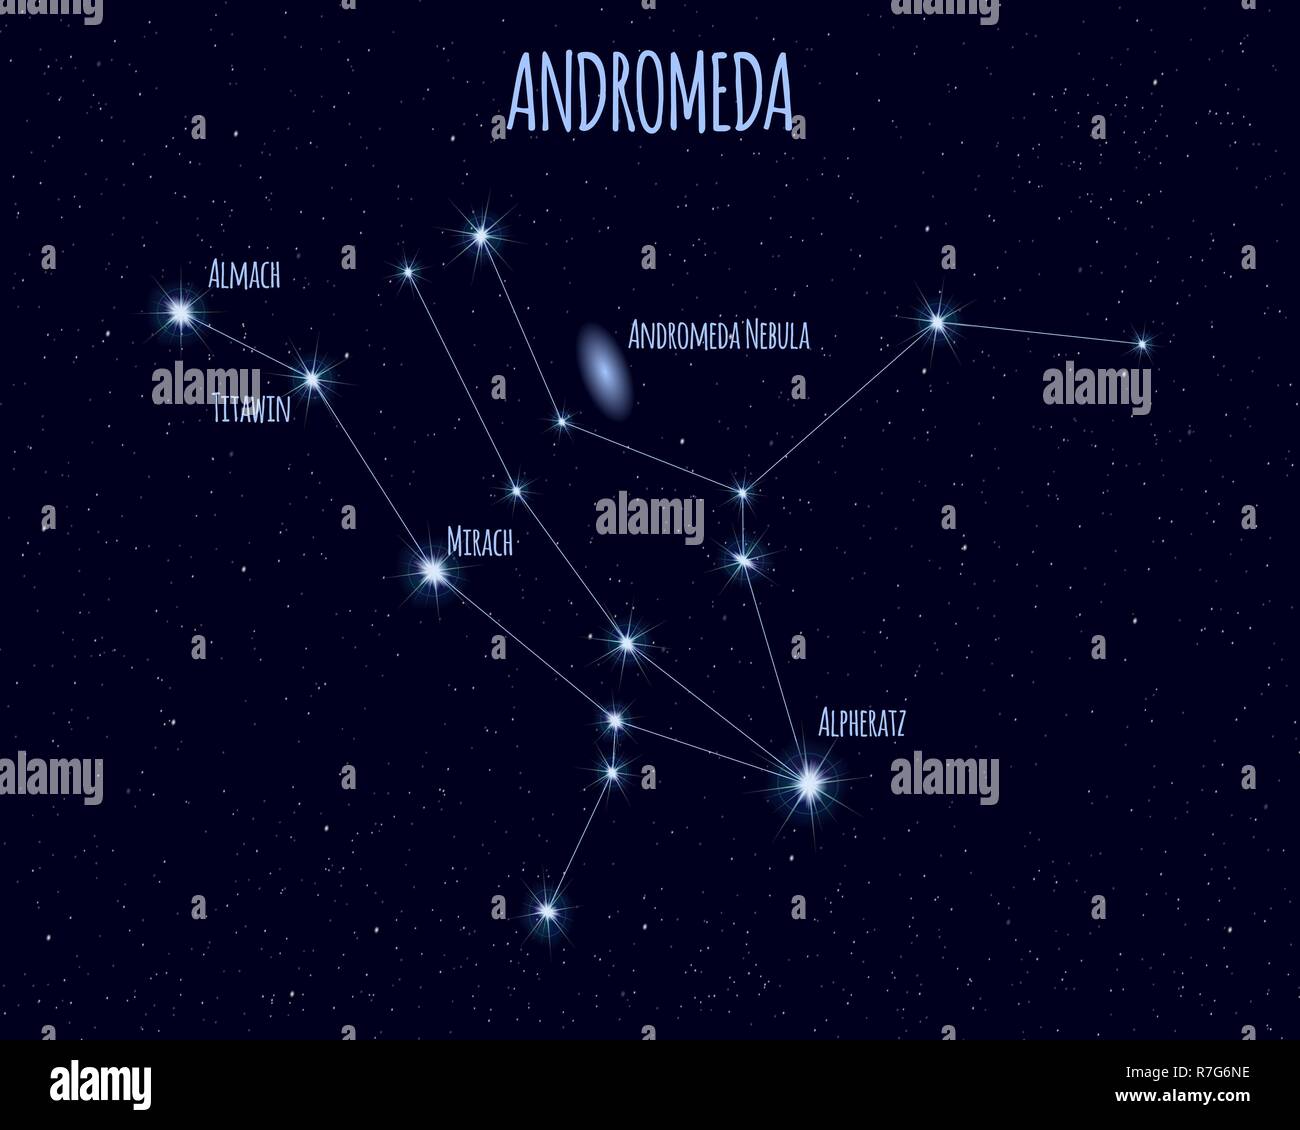 Andromeda Sternbild, Vector Illustration mit den Namen der Stars gegen den Sternenhimmel Stock Vektor